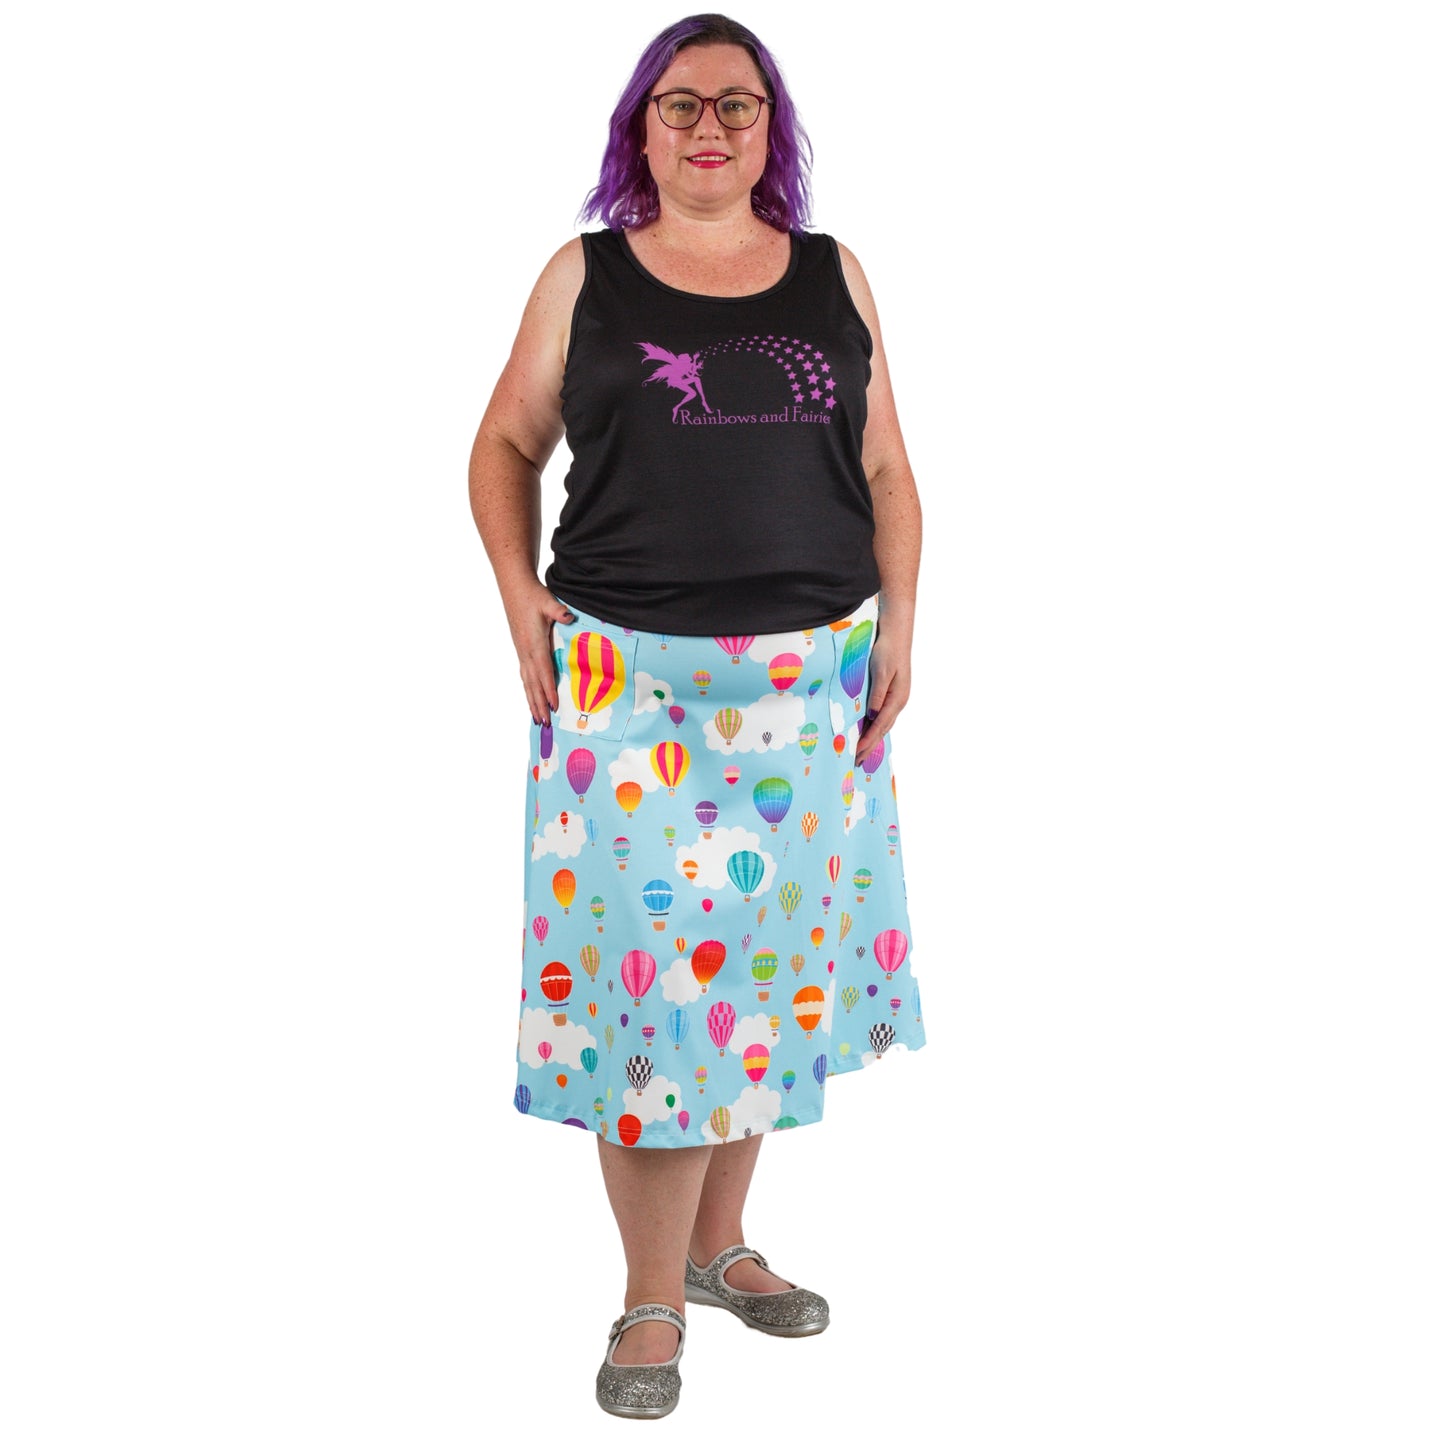 Whimsy Original Skirt by RainbowsAndFairies.com.au (Balloons - Hot Air Balloon - Skirt With Pockets - Kitsch) - SKU: CL_OSKRT_WHIMS_ORG - Pic-03